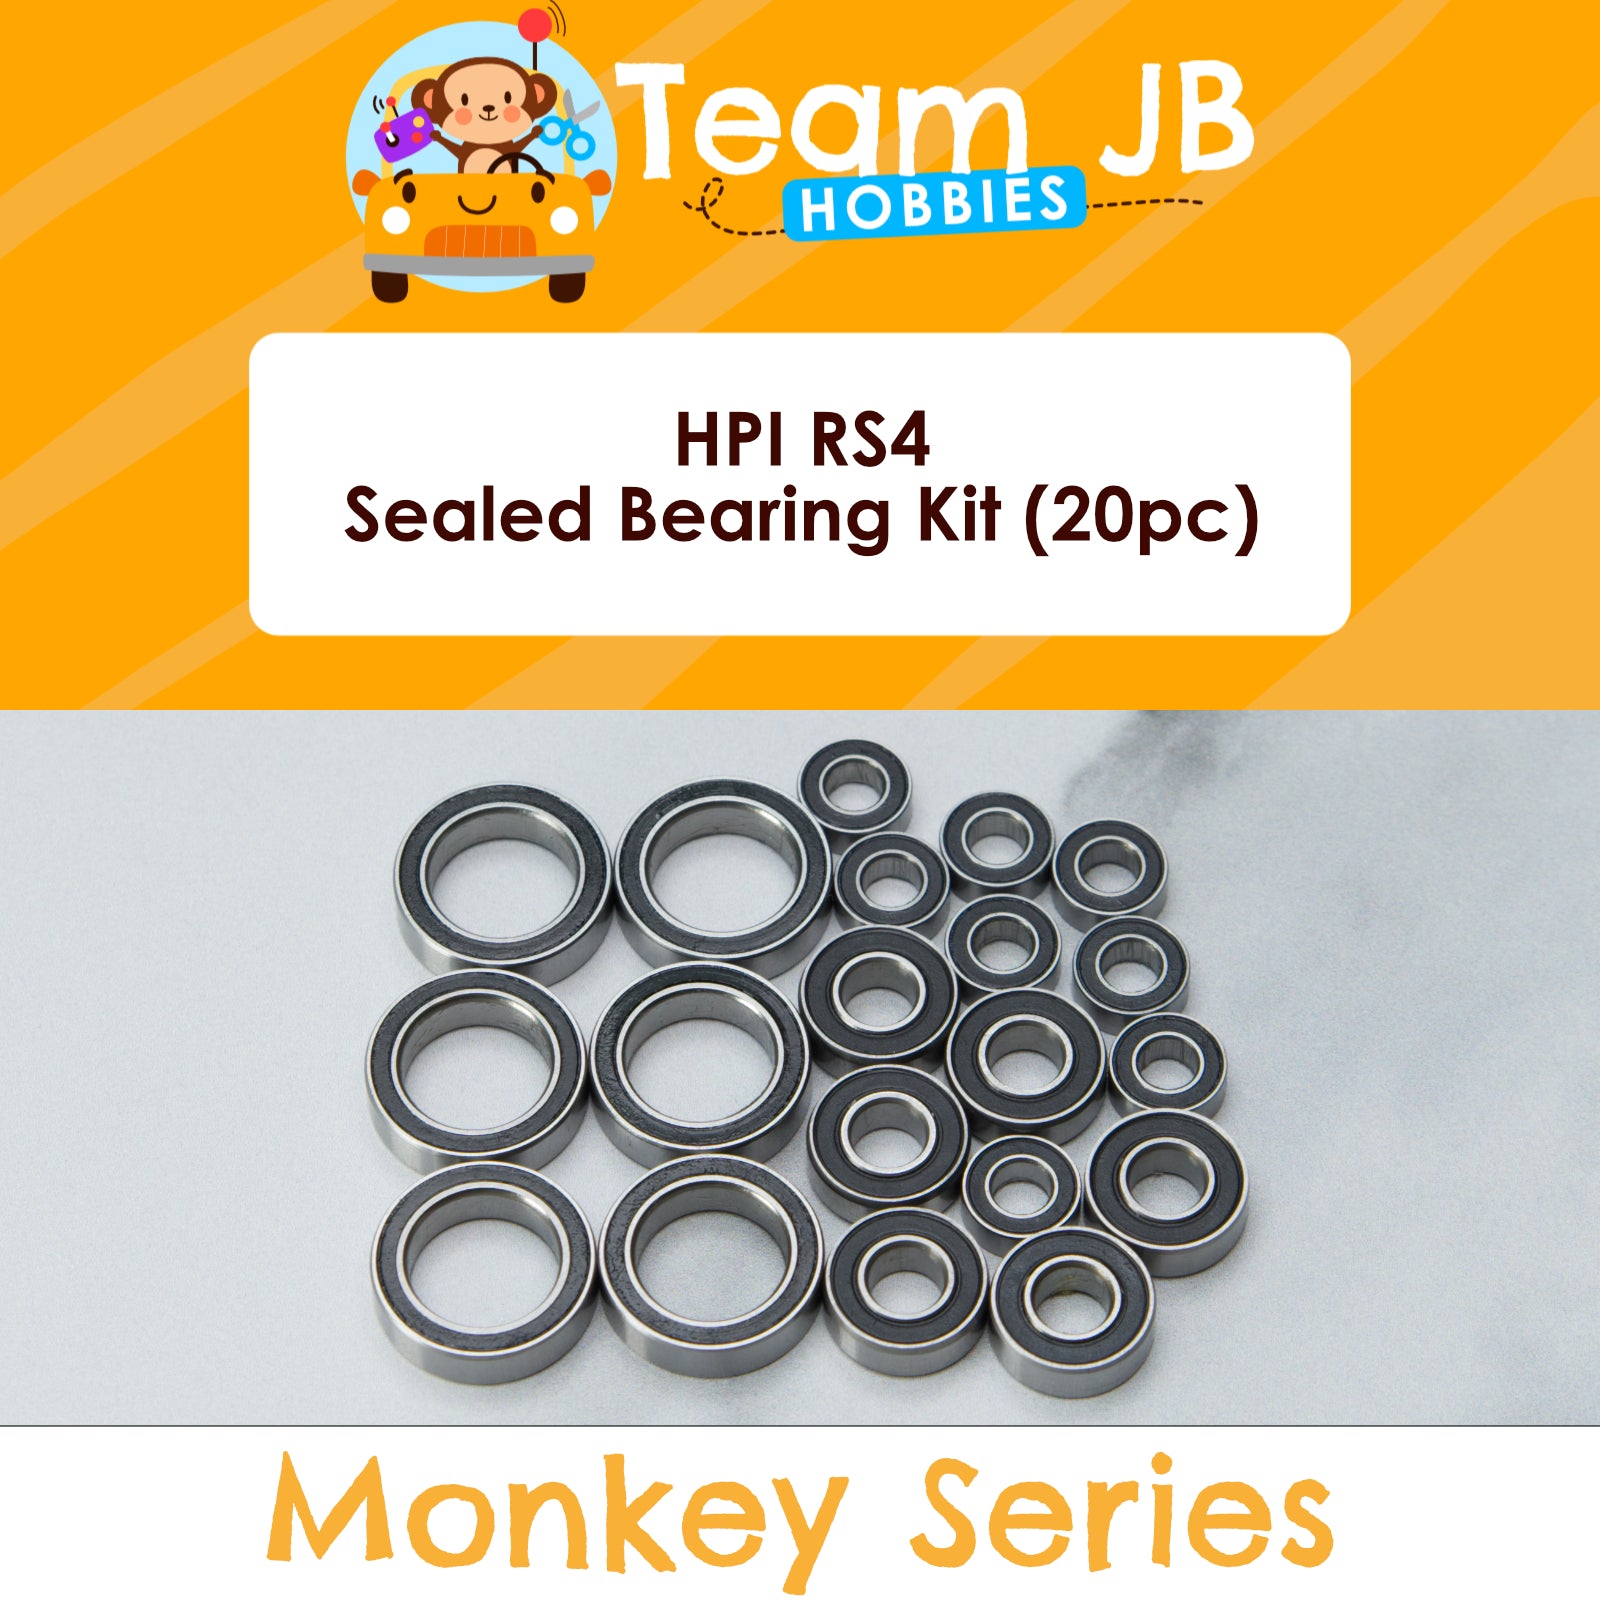 HPI RS4 - Sealed Bearing Kit